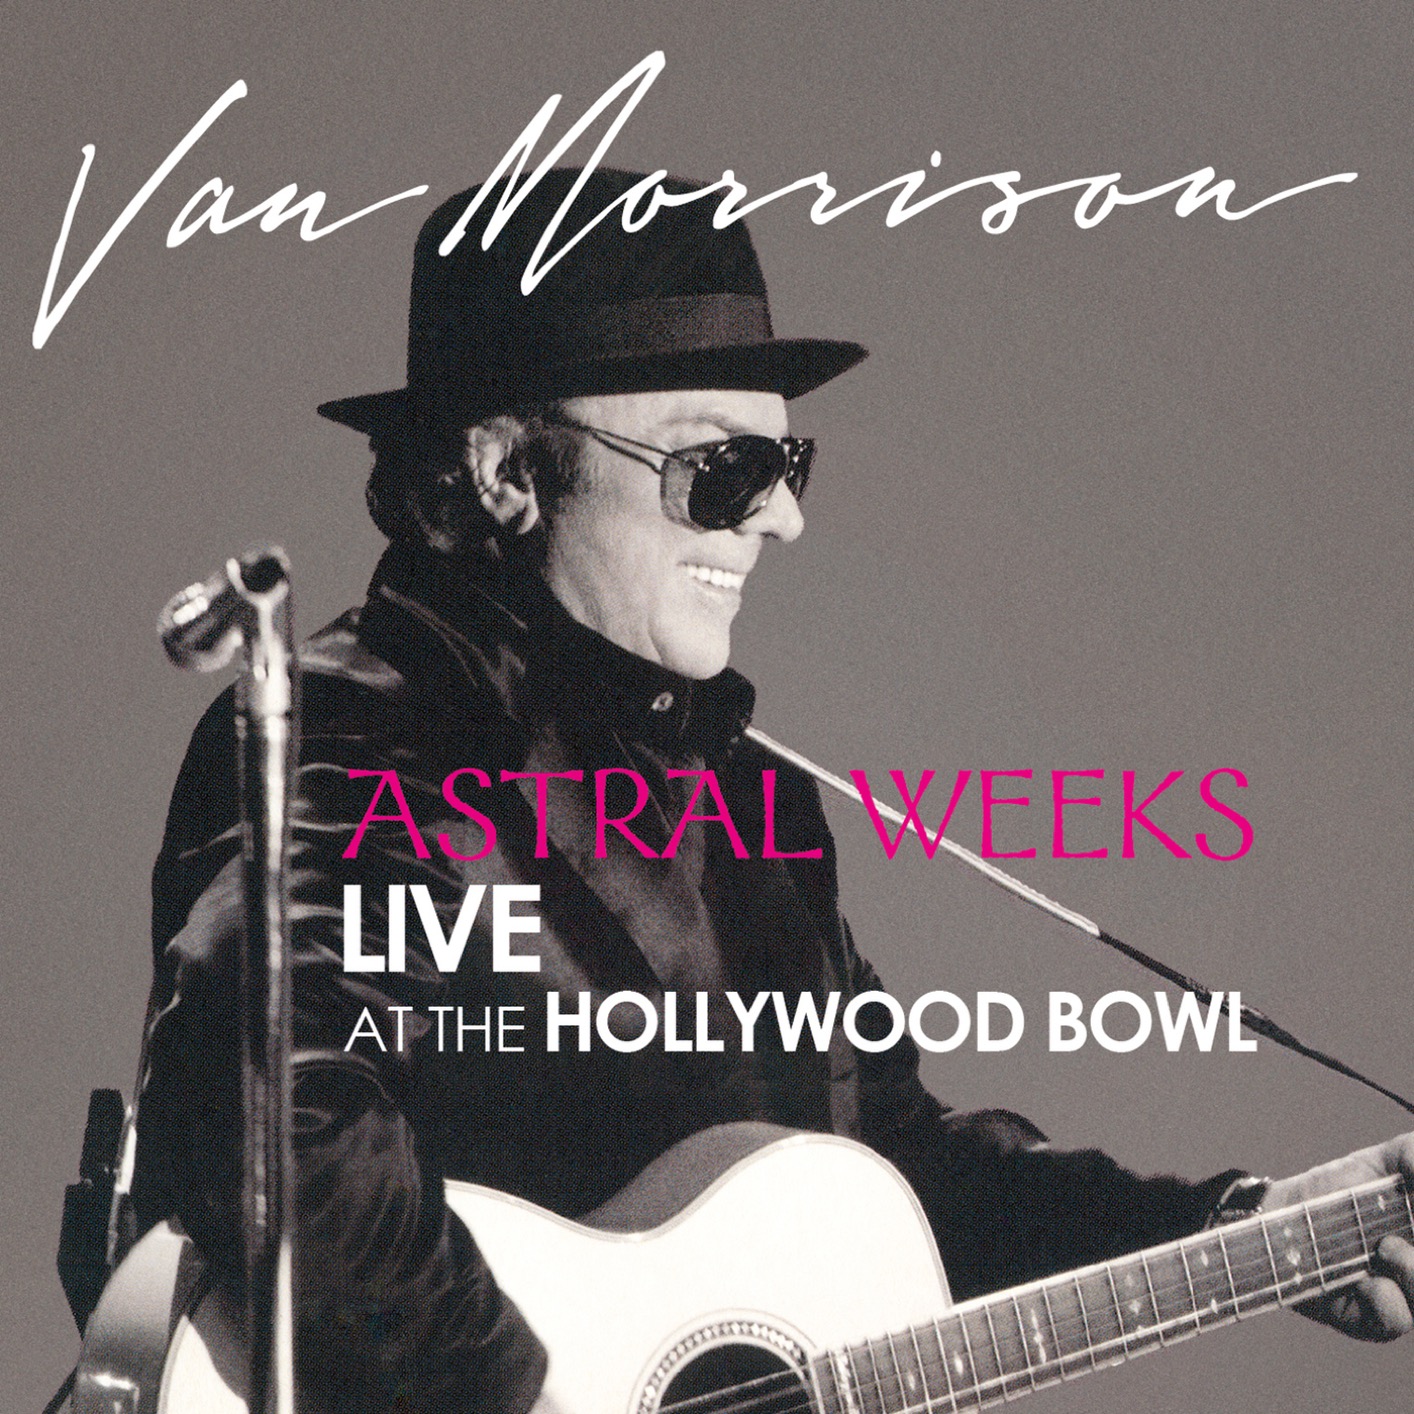 Van Morrison - Astral Weeks: Live at the Hollywood Bowl (Remastered) (2009/2020) [FLAC 24bit/48kHz]